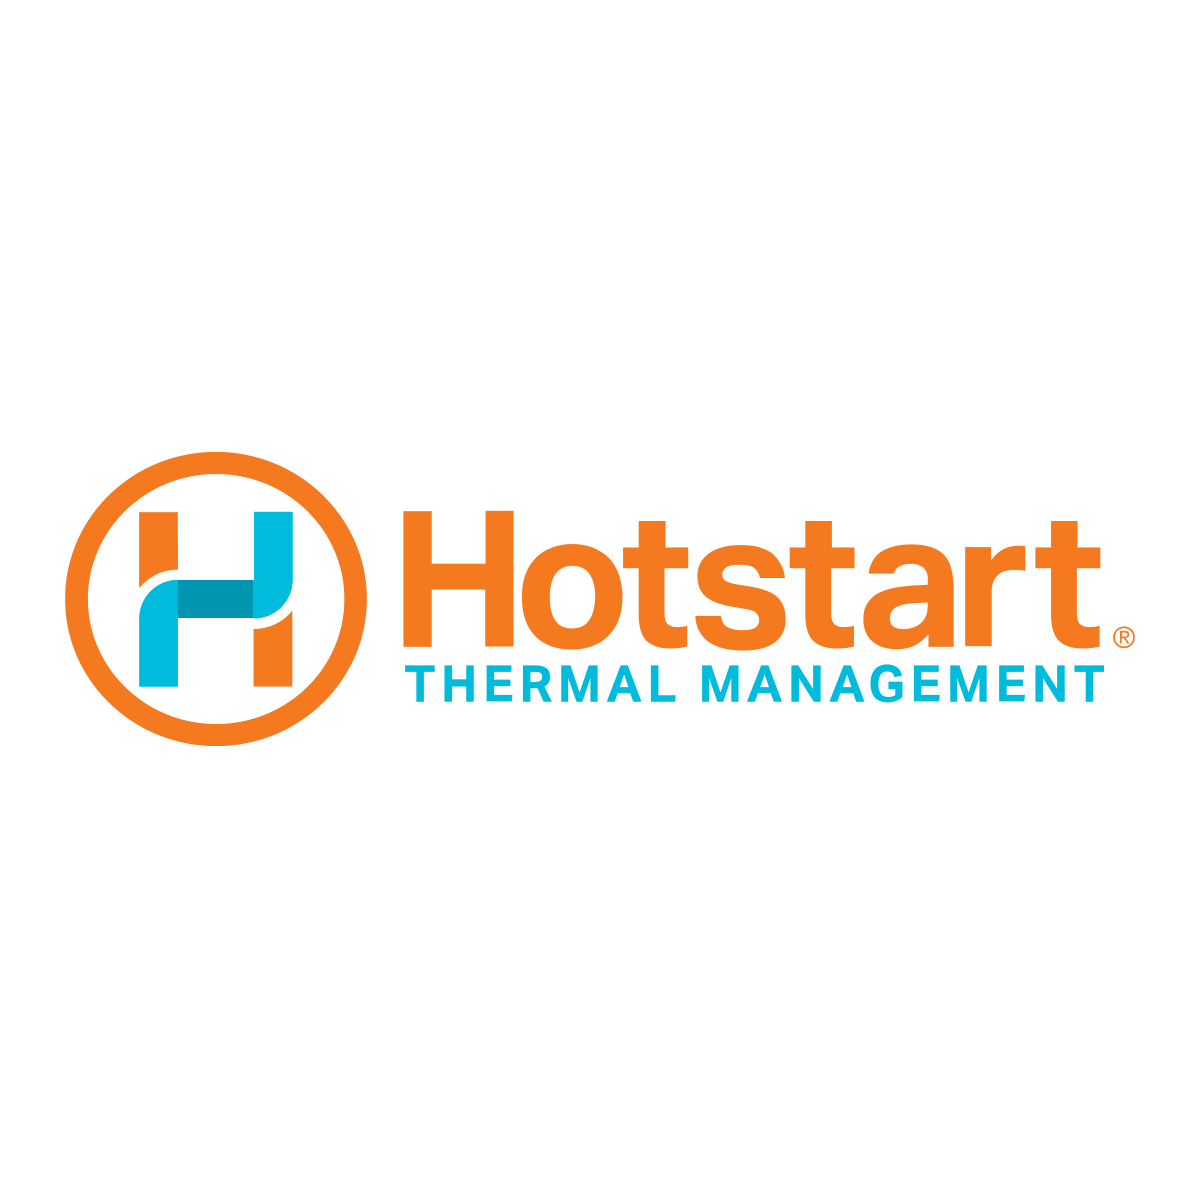 www.hotstart.com